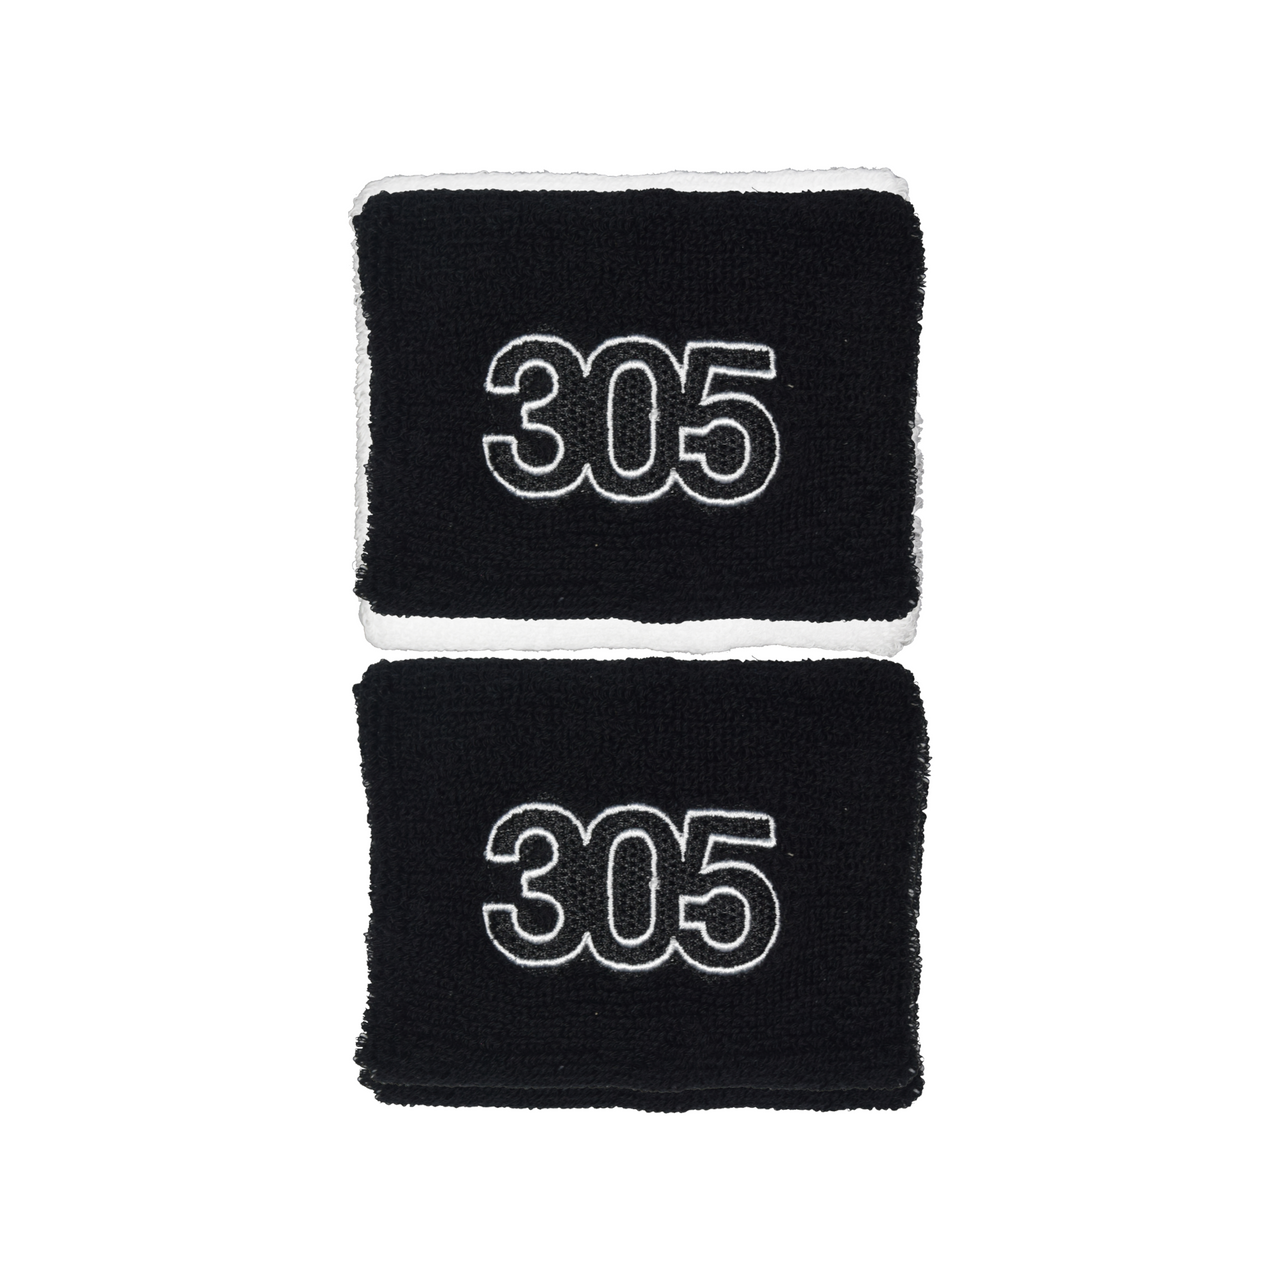 BIG305 Large Sweatbands - Twin Pack